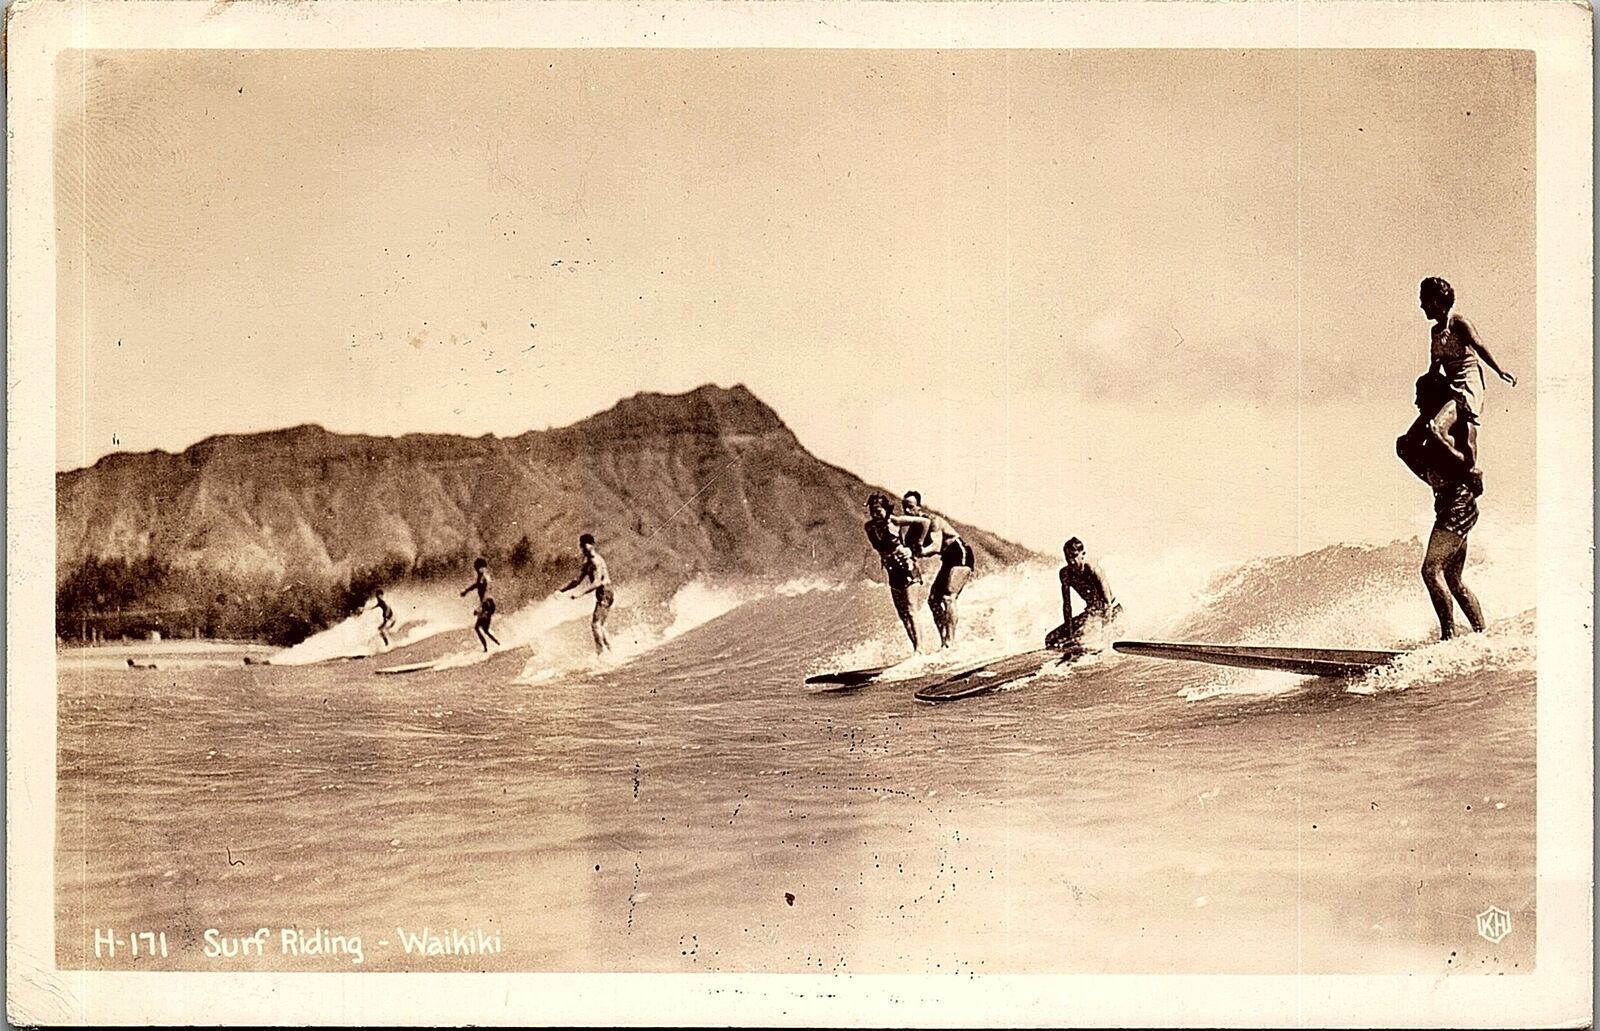 1930s WAIKIKI HAWAII SURF RIDING SURFBOARD RARE REAL PHOTO RPPC POSTCARD 38-49